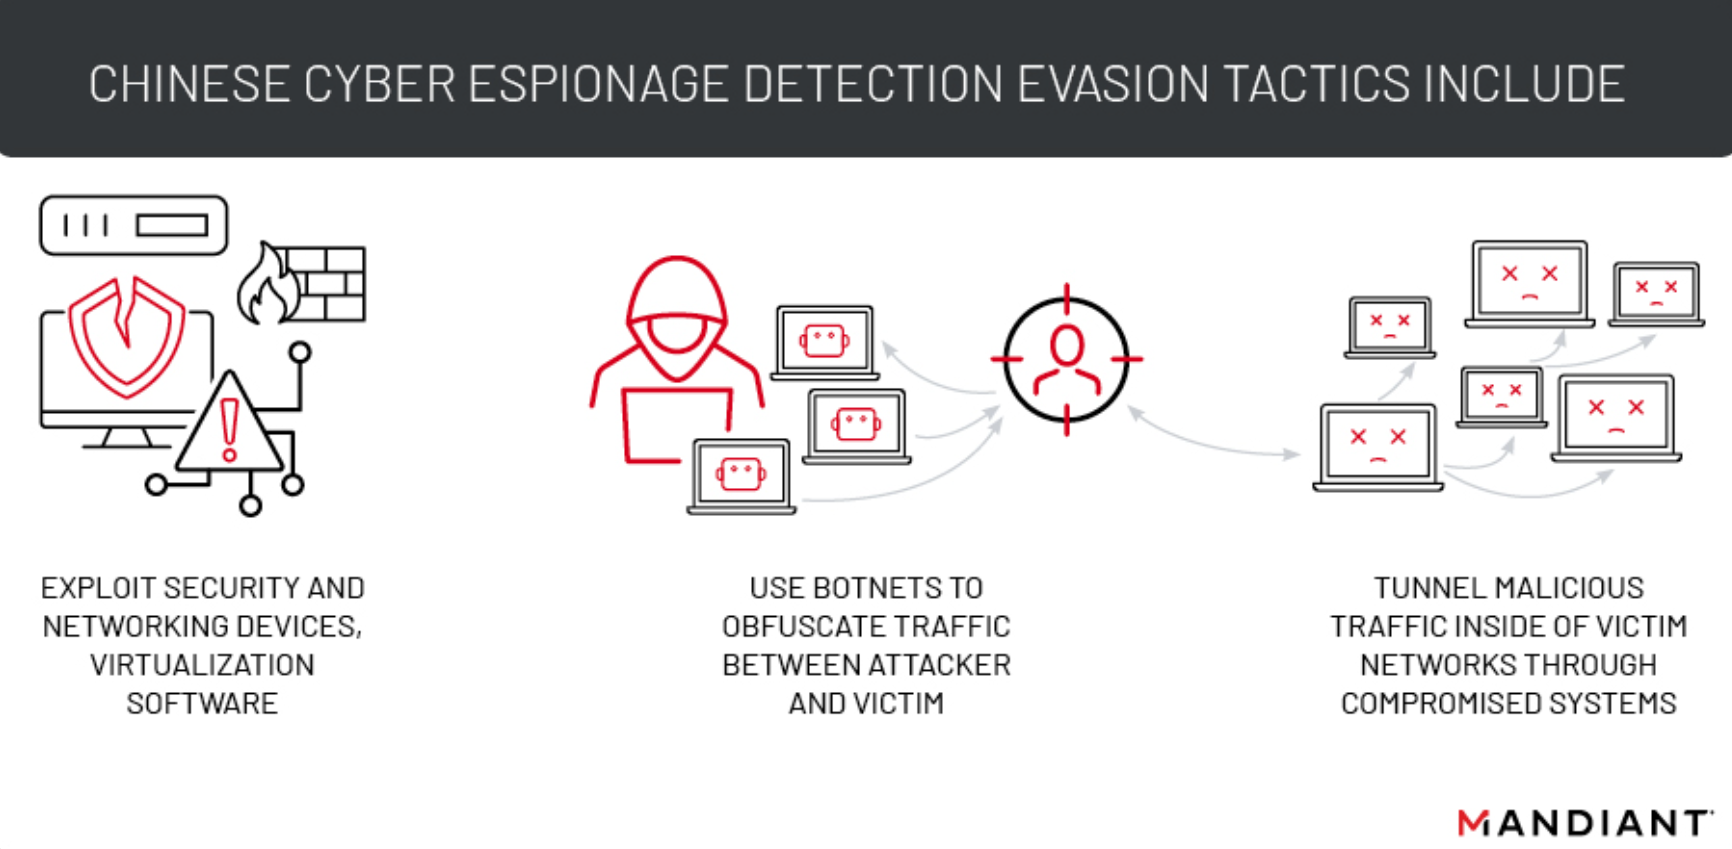 Chinese cyber espionage detection evasion tactics